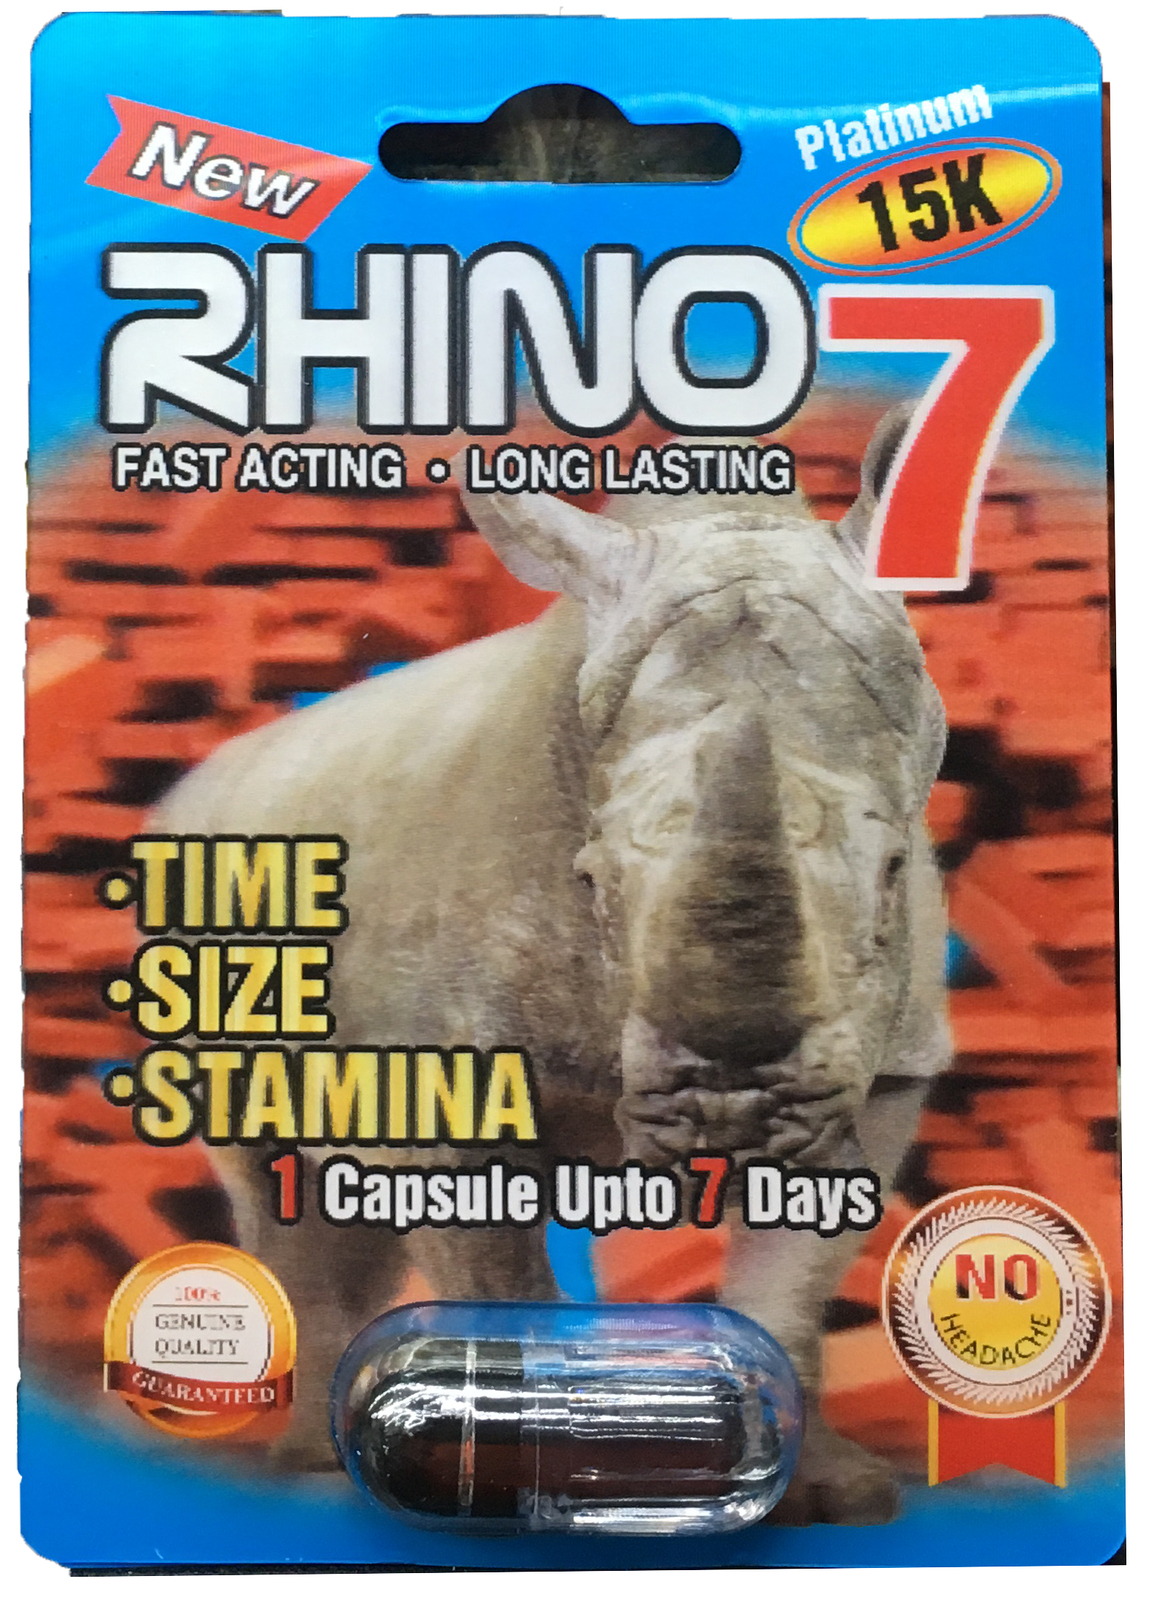 rhino 7 platinum 12000 review